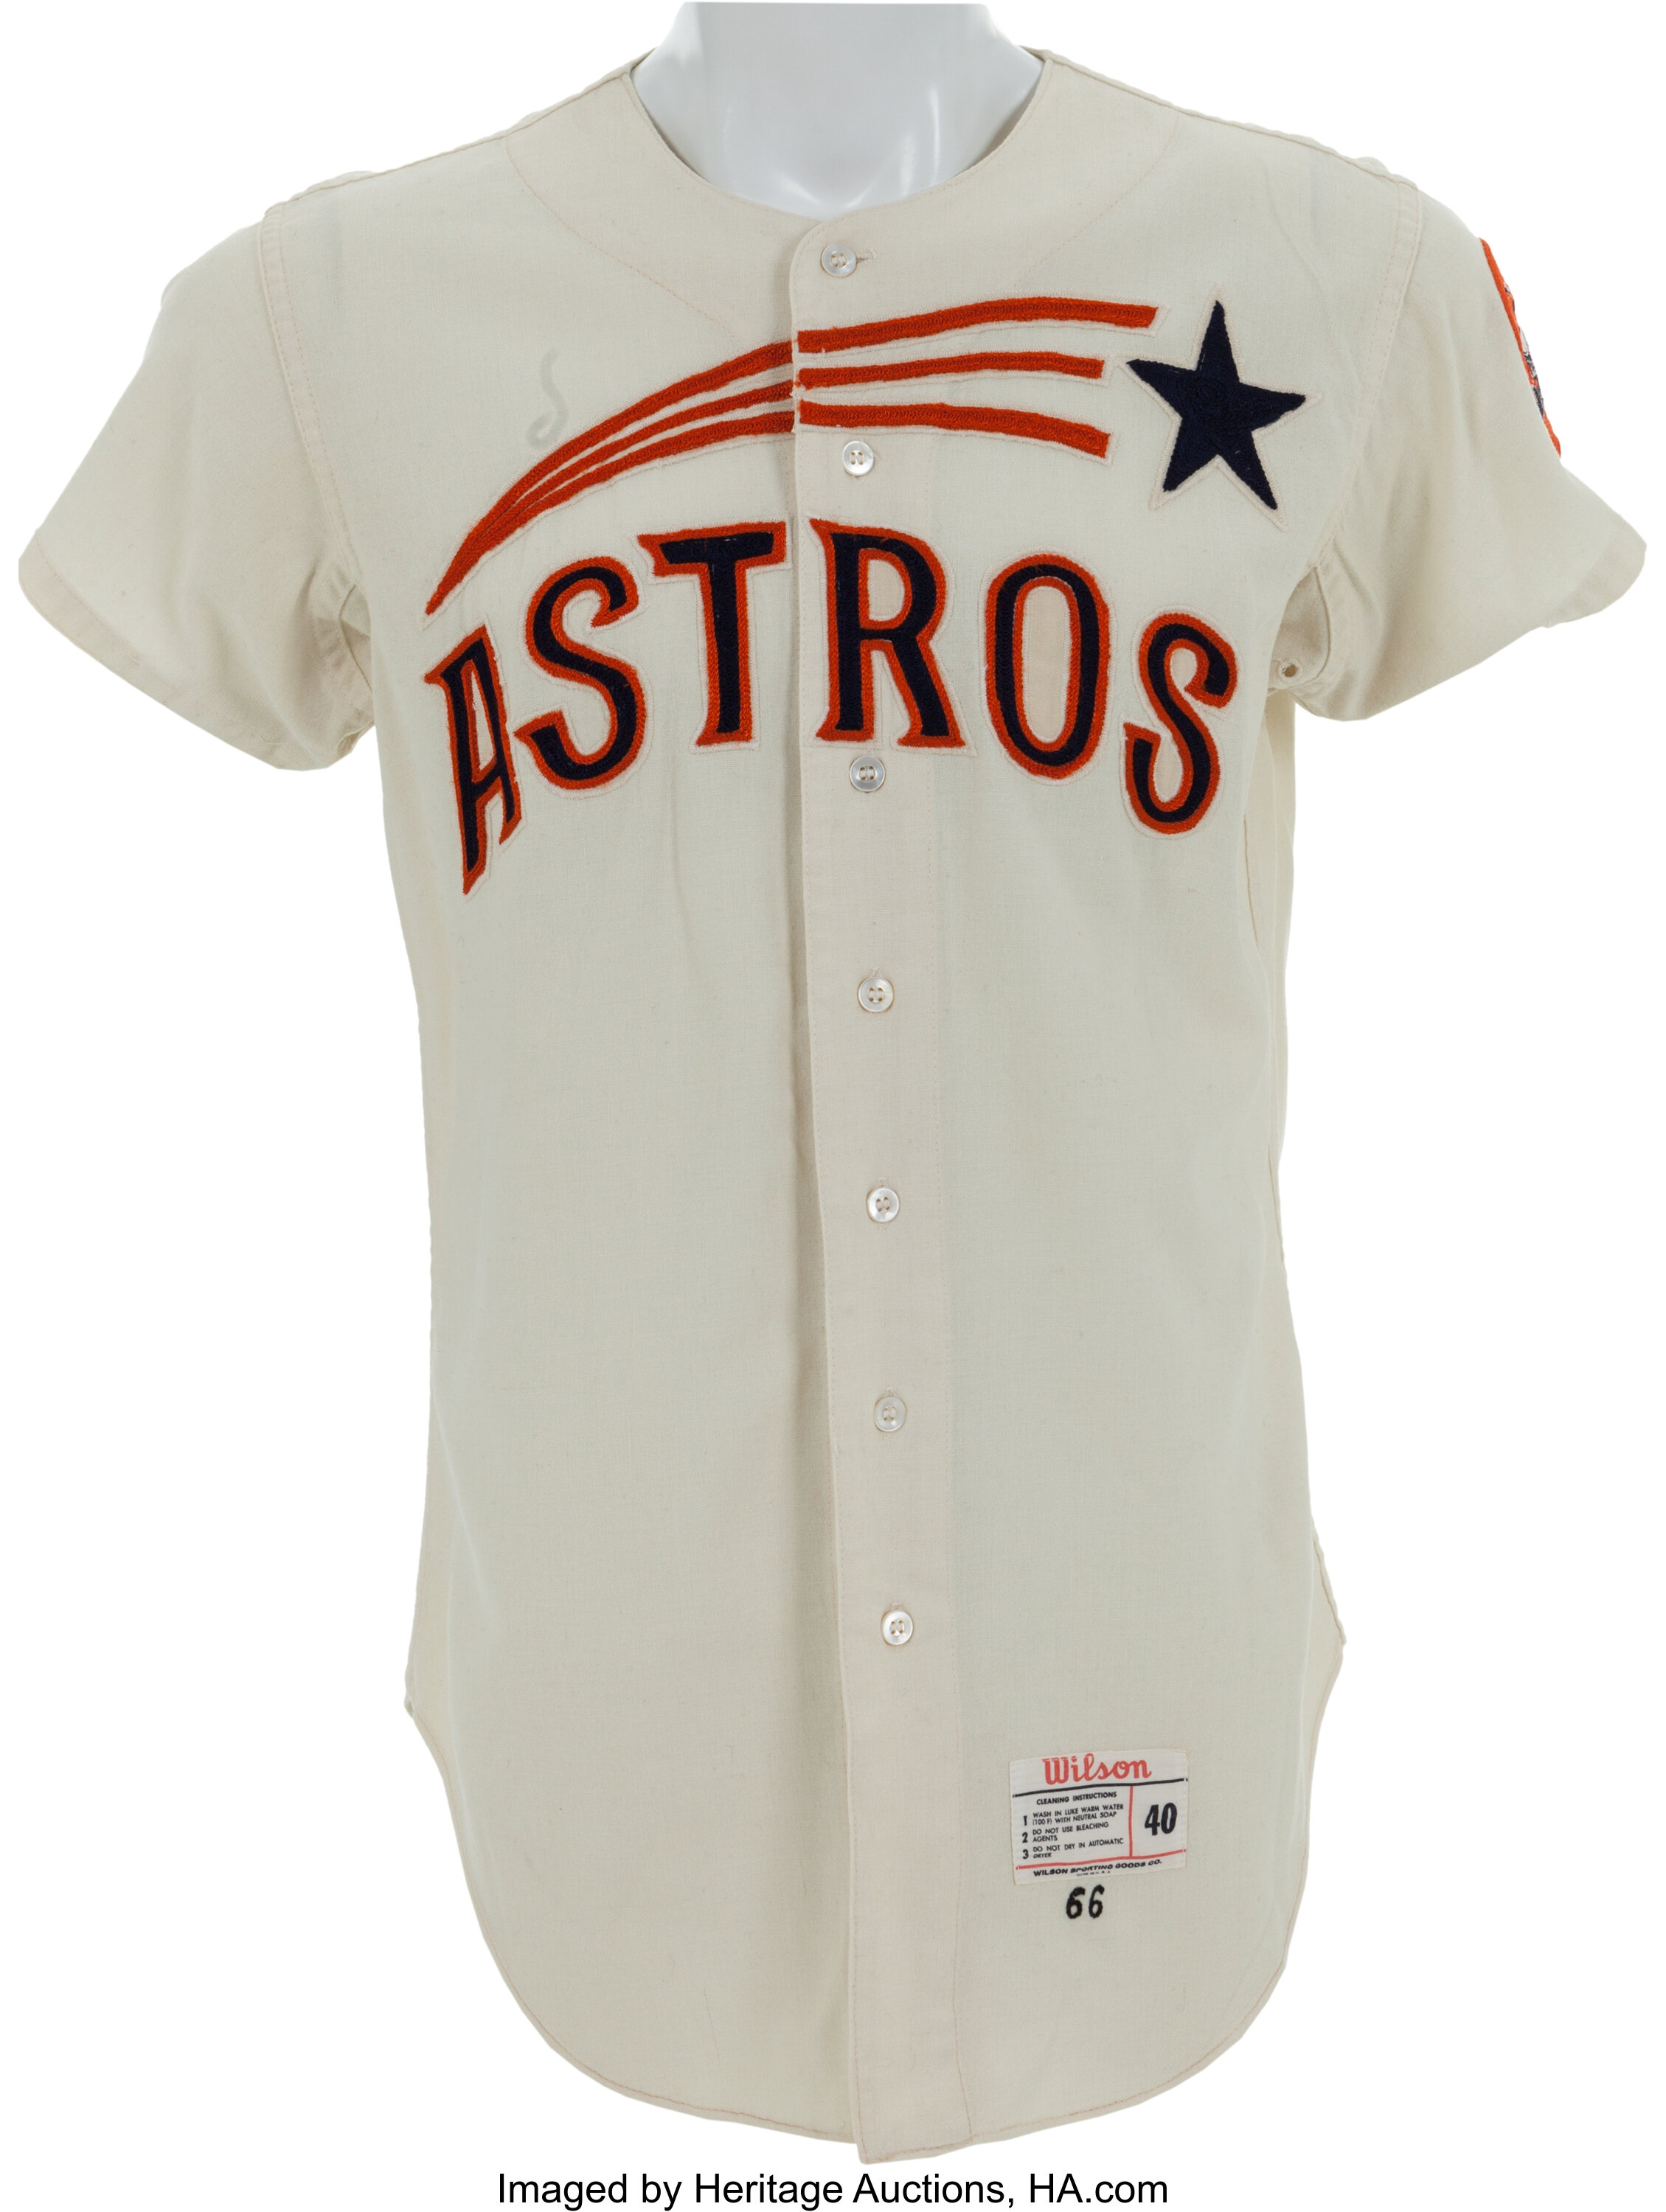 1966 Houston Astros No. 1 Game Worn Jersey. Baseball